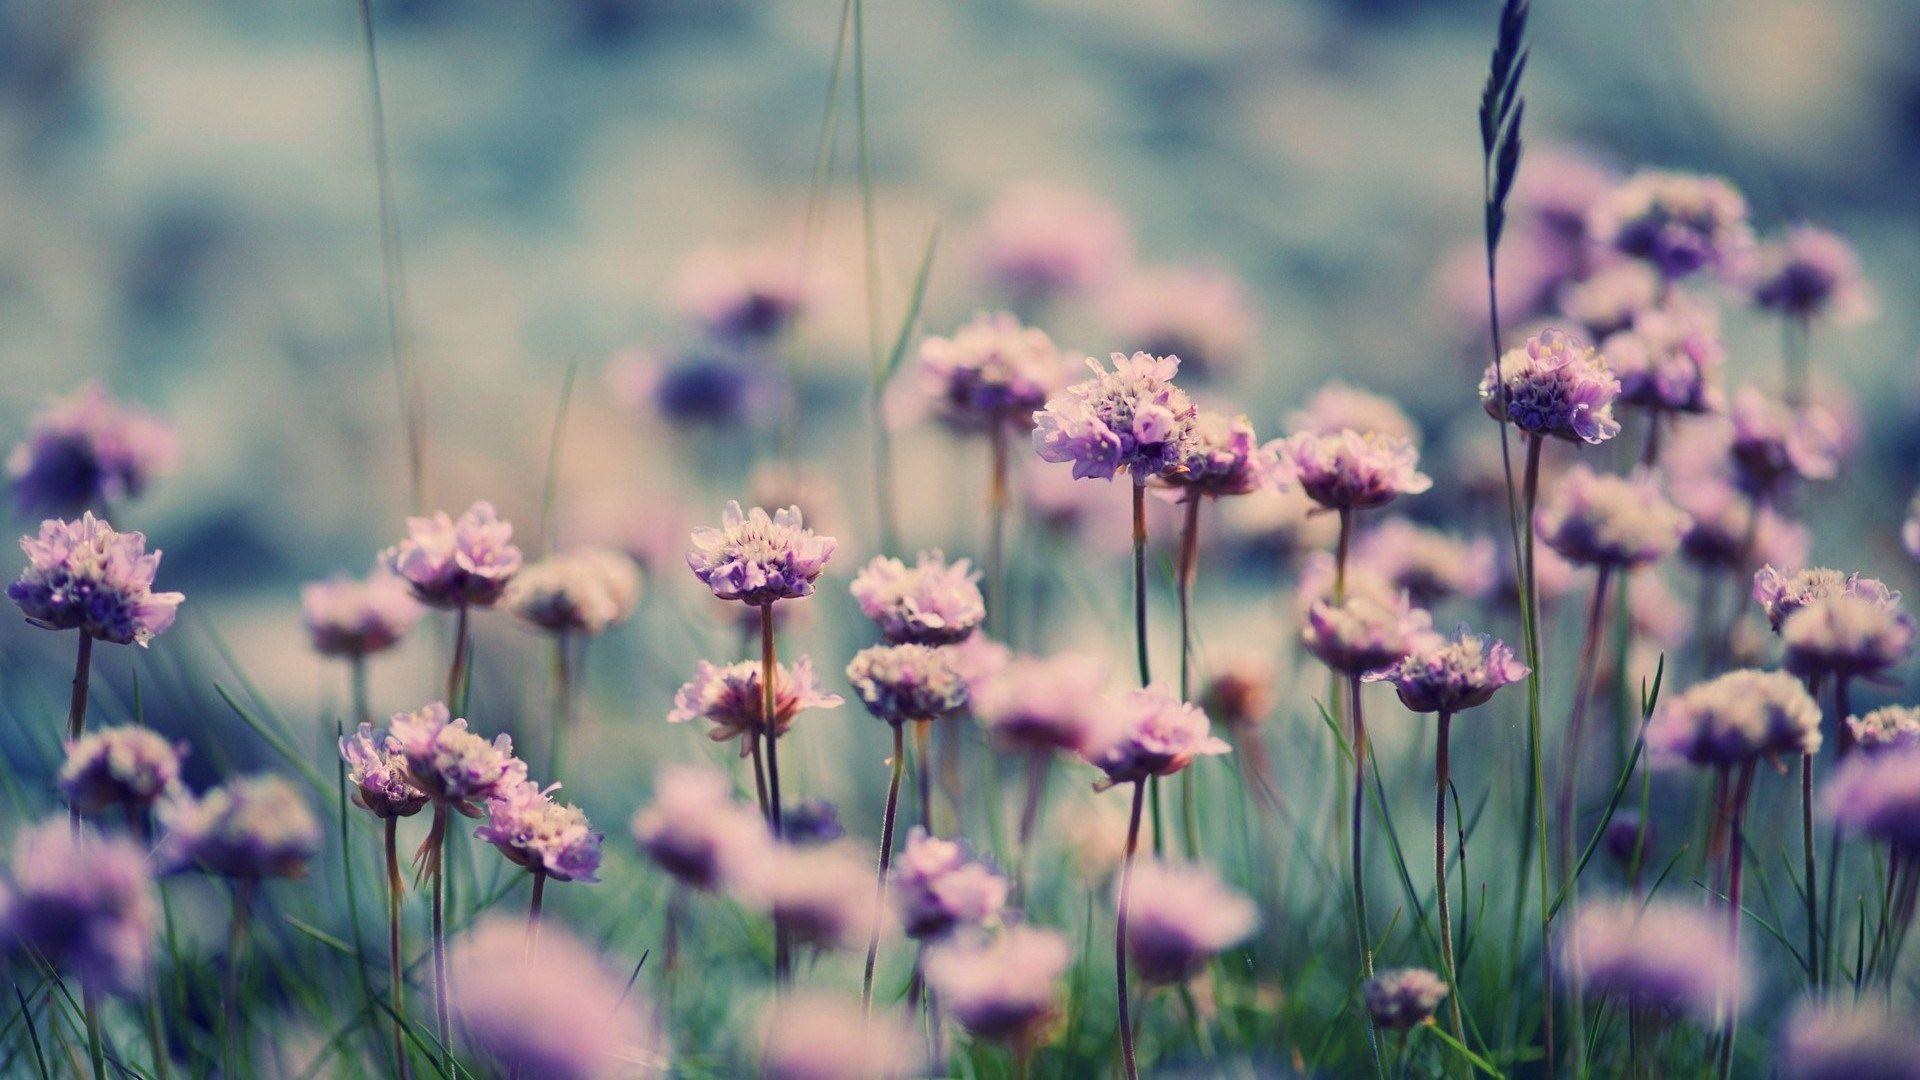 I love wildflowers. I always imagine myself running through a field